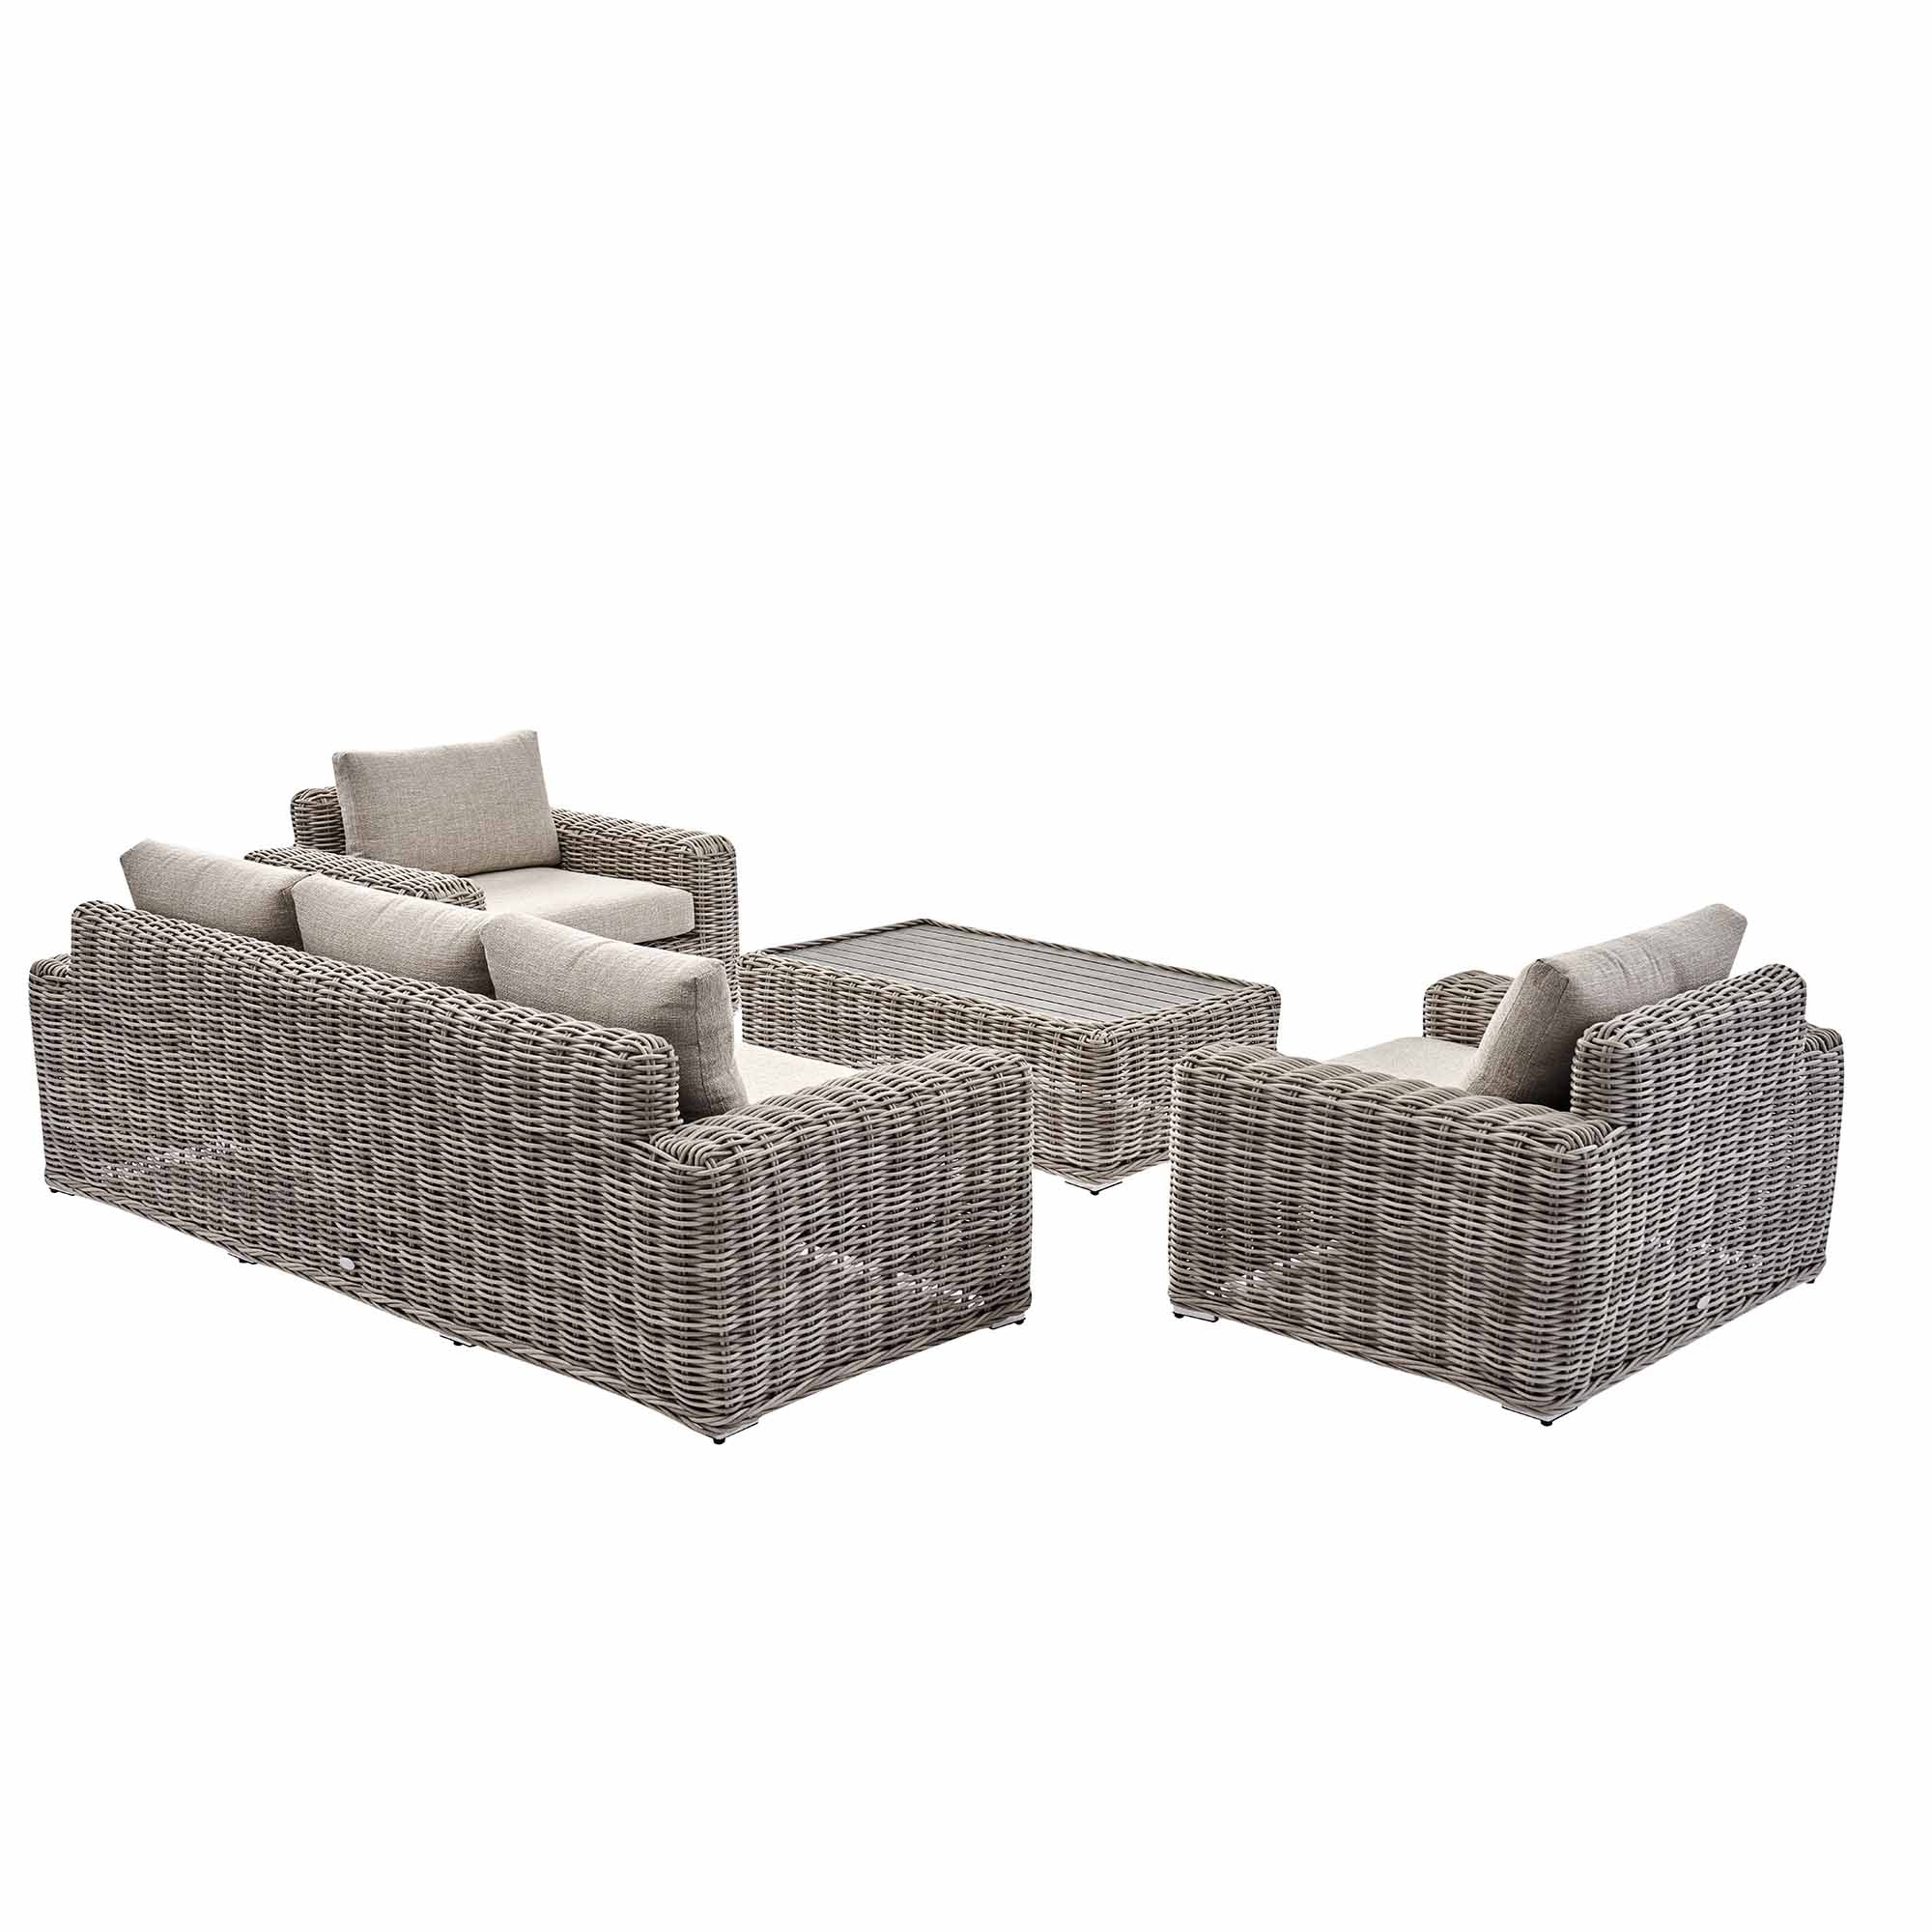 Bellagio Round Wicker Sofa Set with Coffee Table, Light Grey